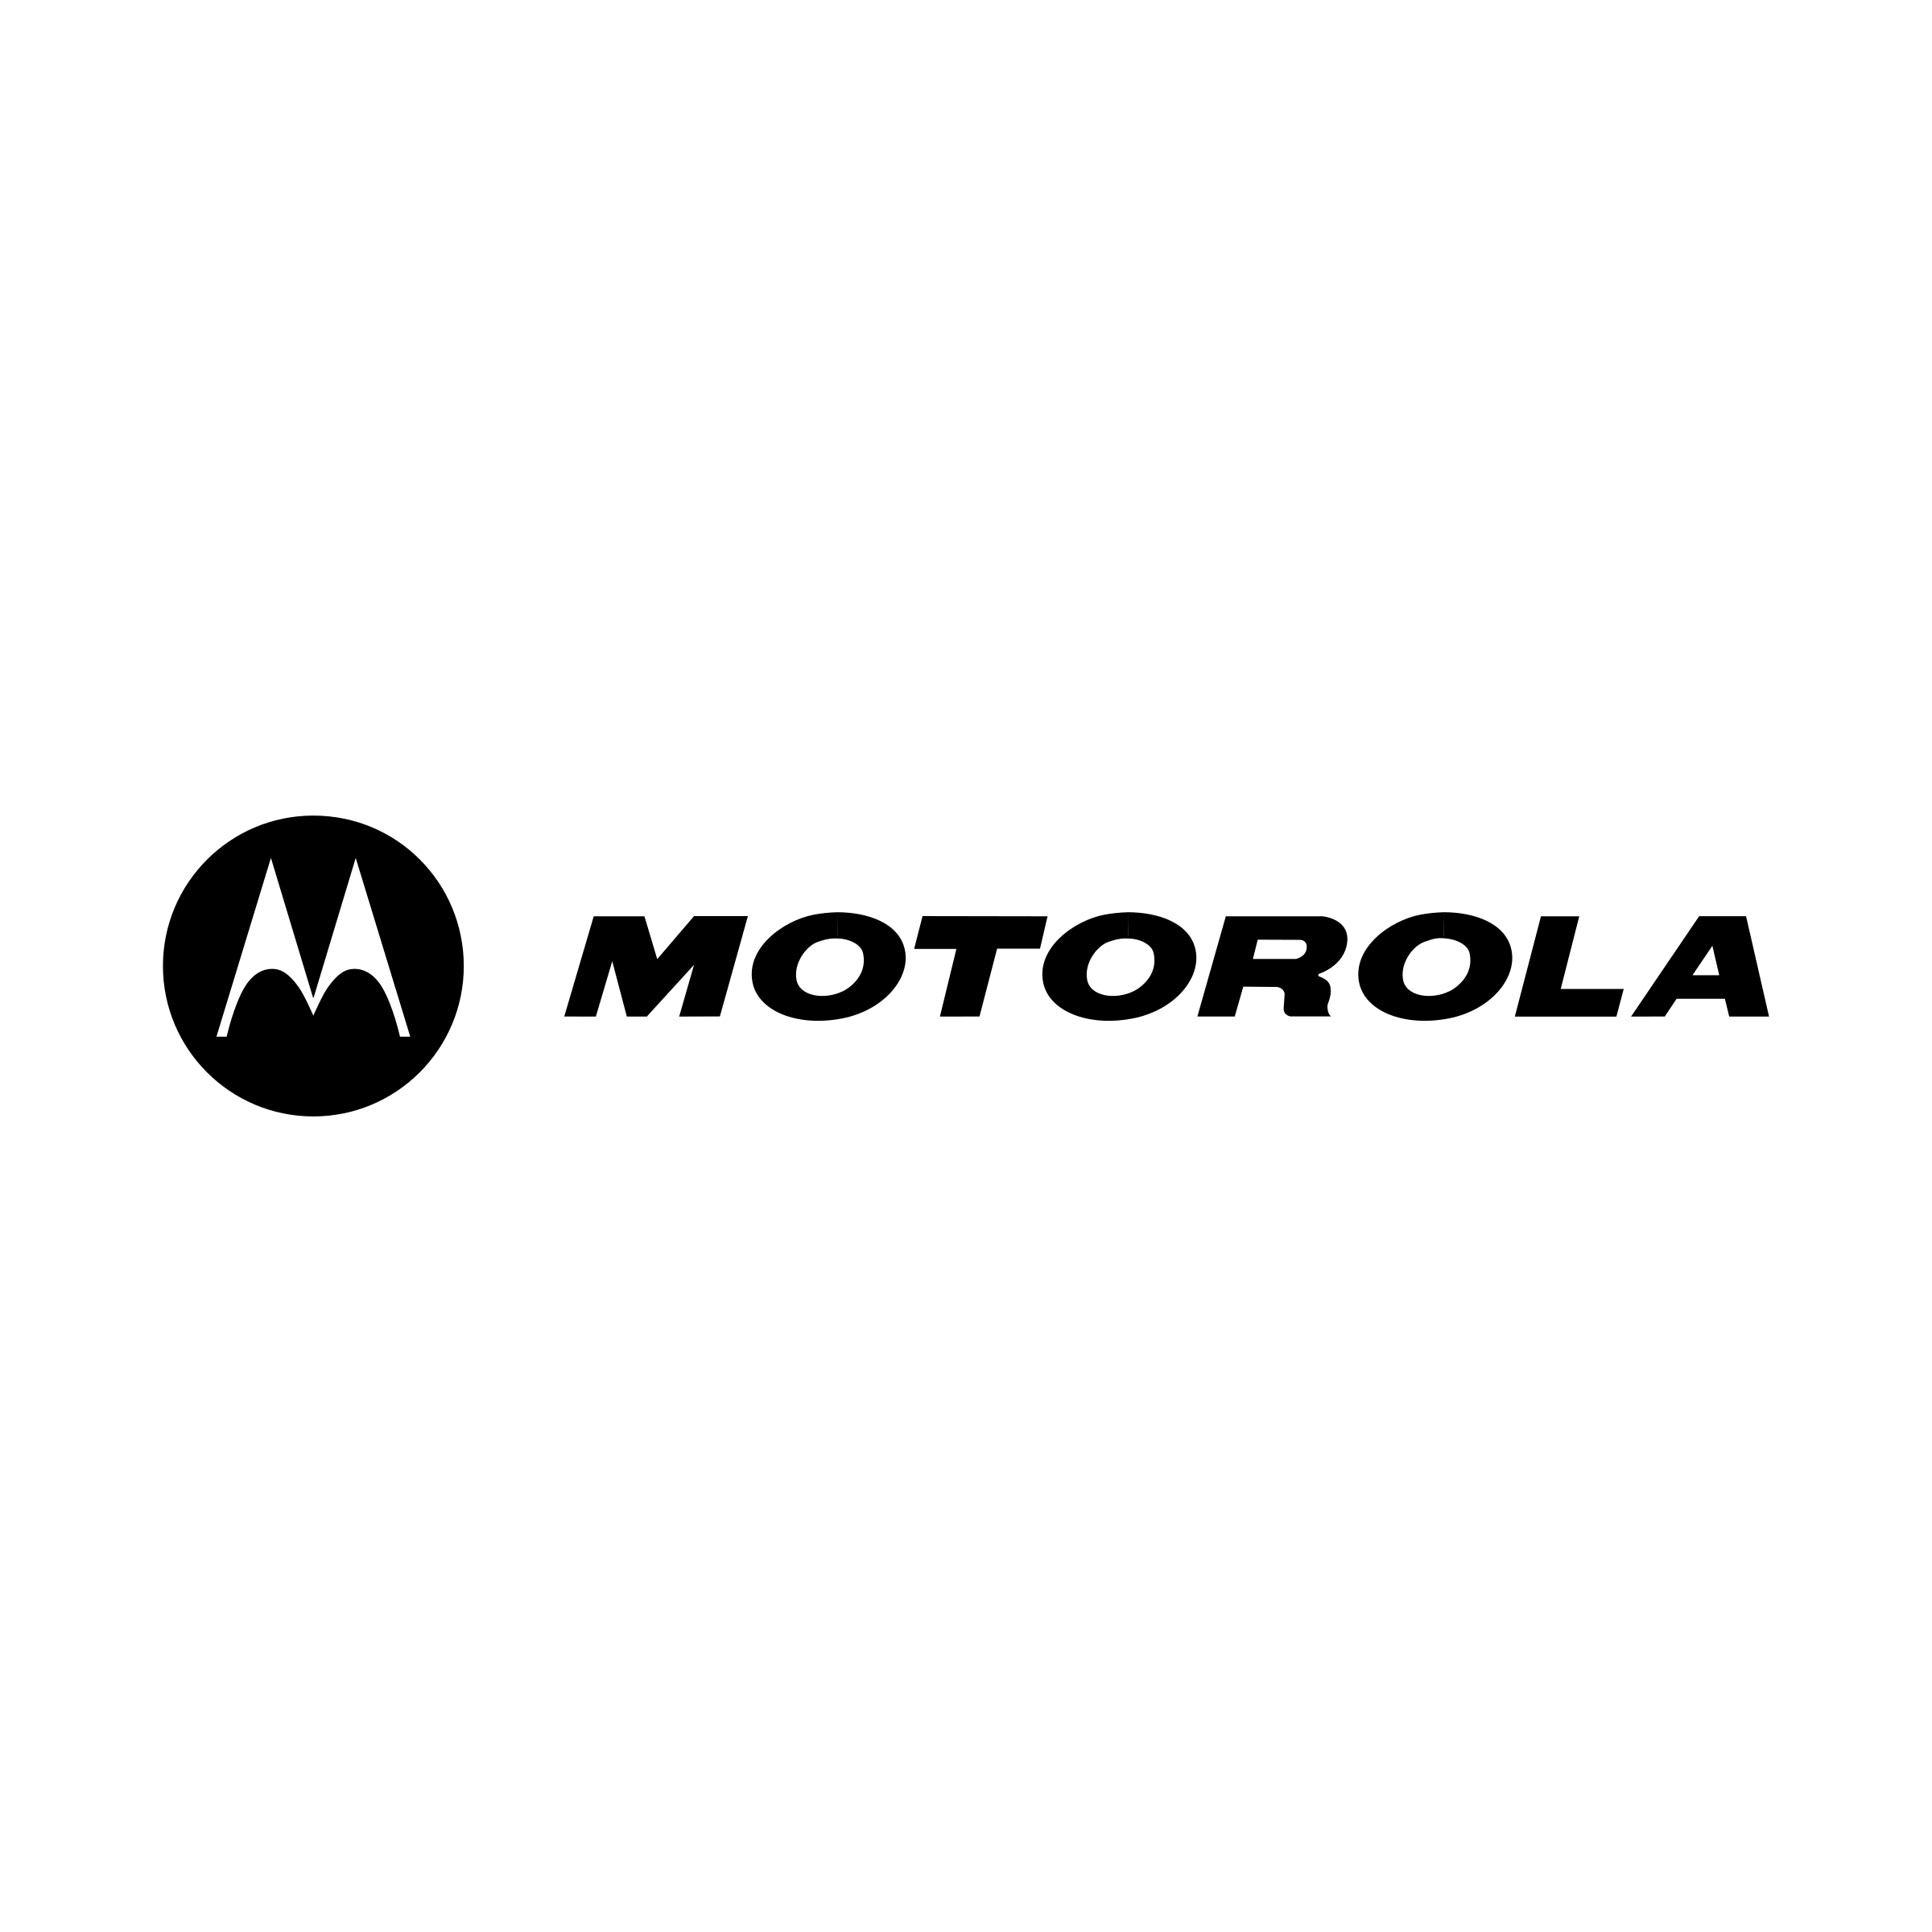 Motorola Logo - Motorola Logo PNG Transparent & SVG Vector - Freebie Supply